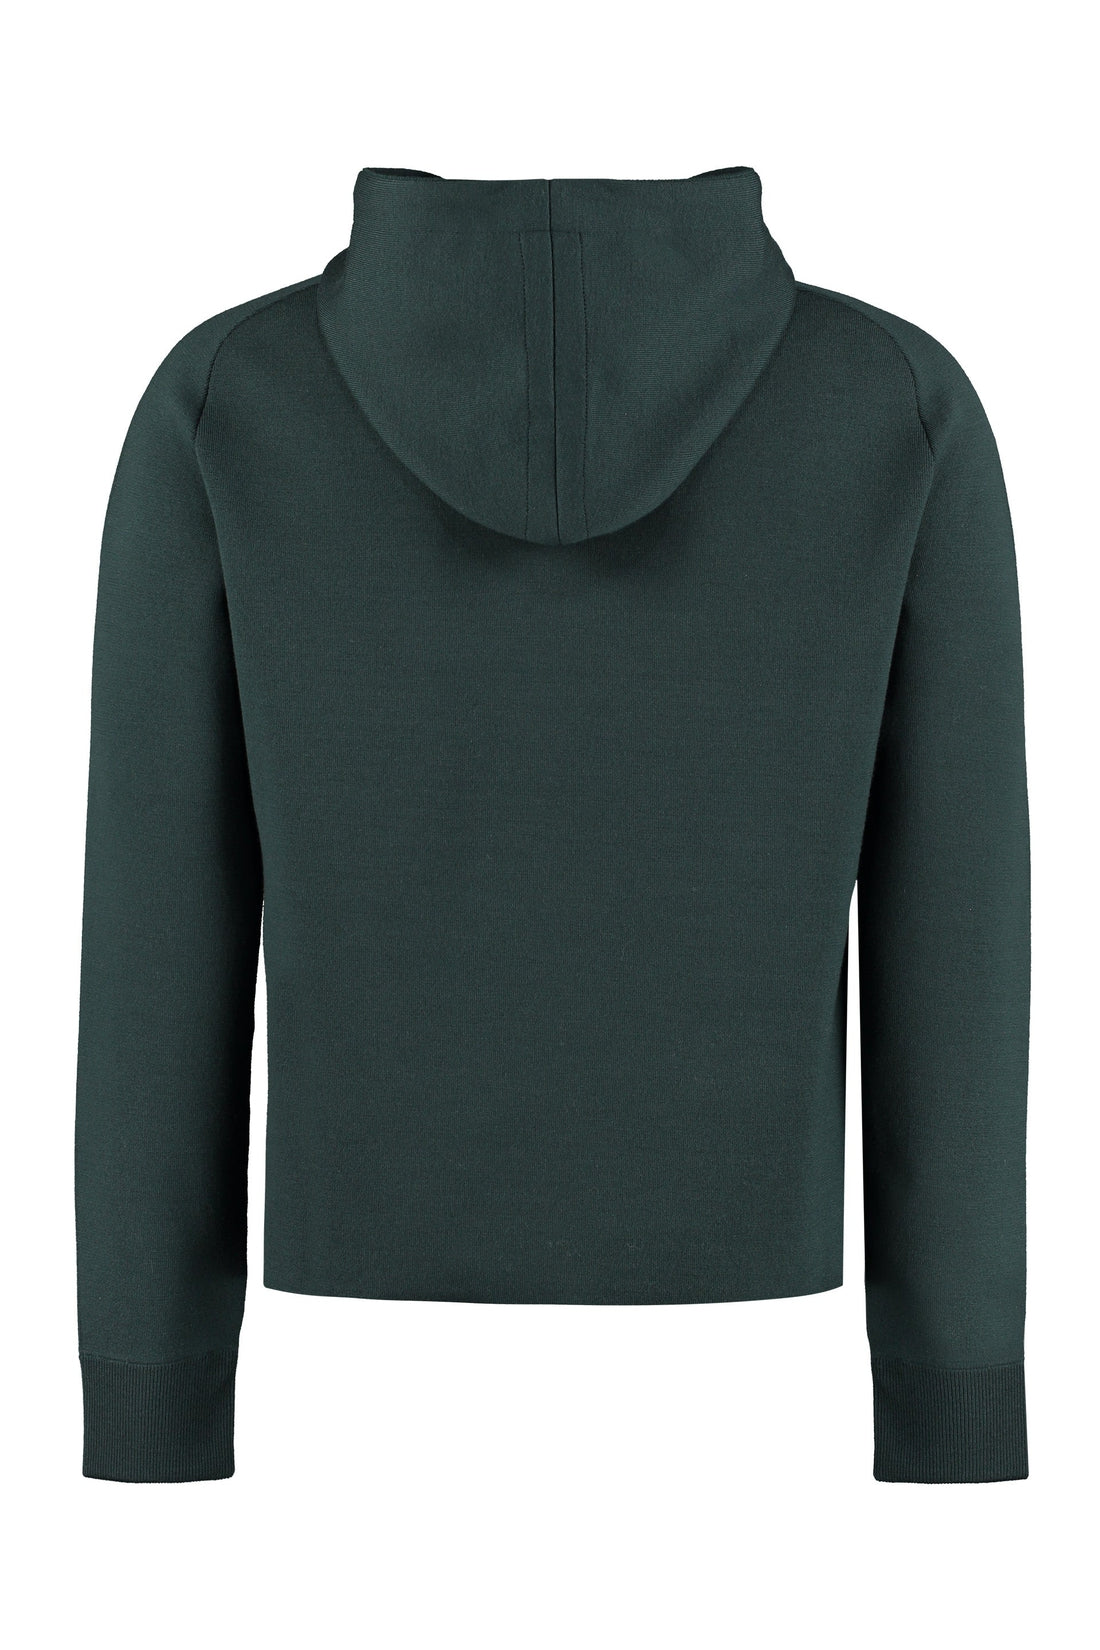 Bottega Veneta-OUTLET-SALE-Knitted hoodie-ARCHIVIST